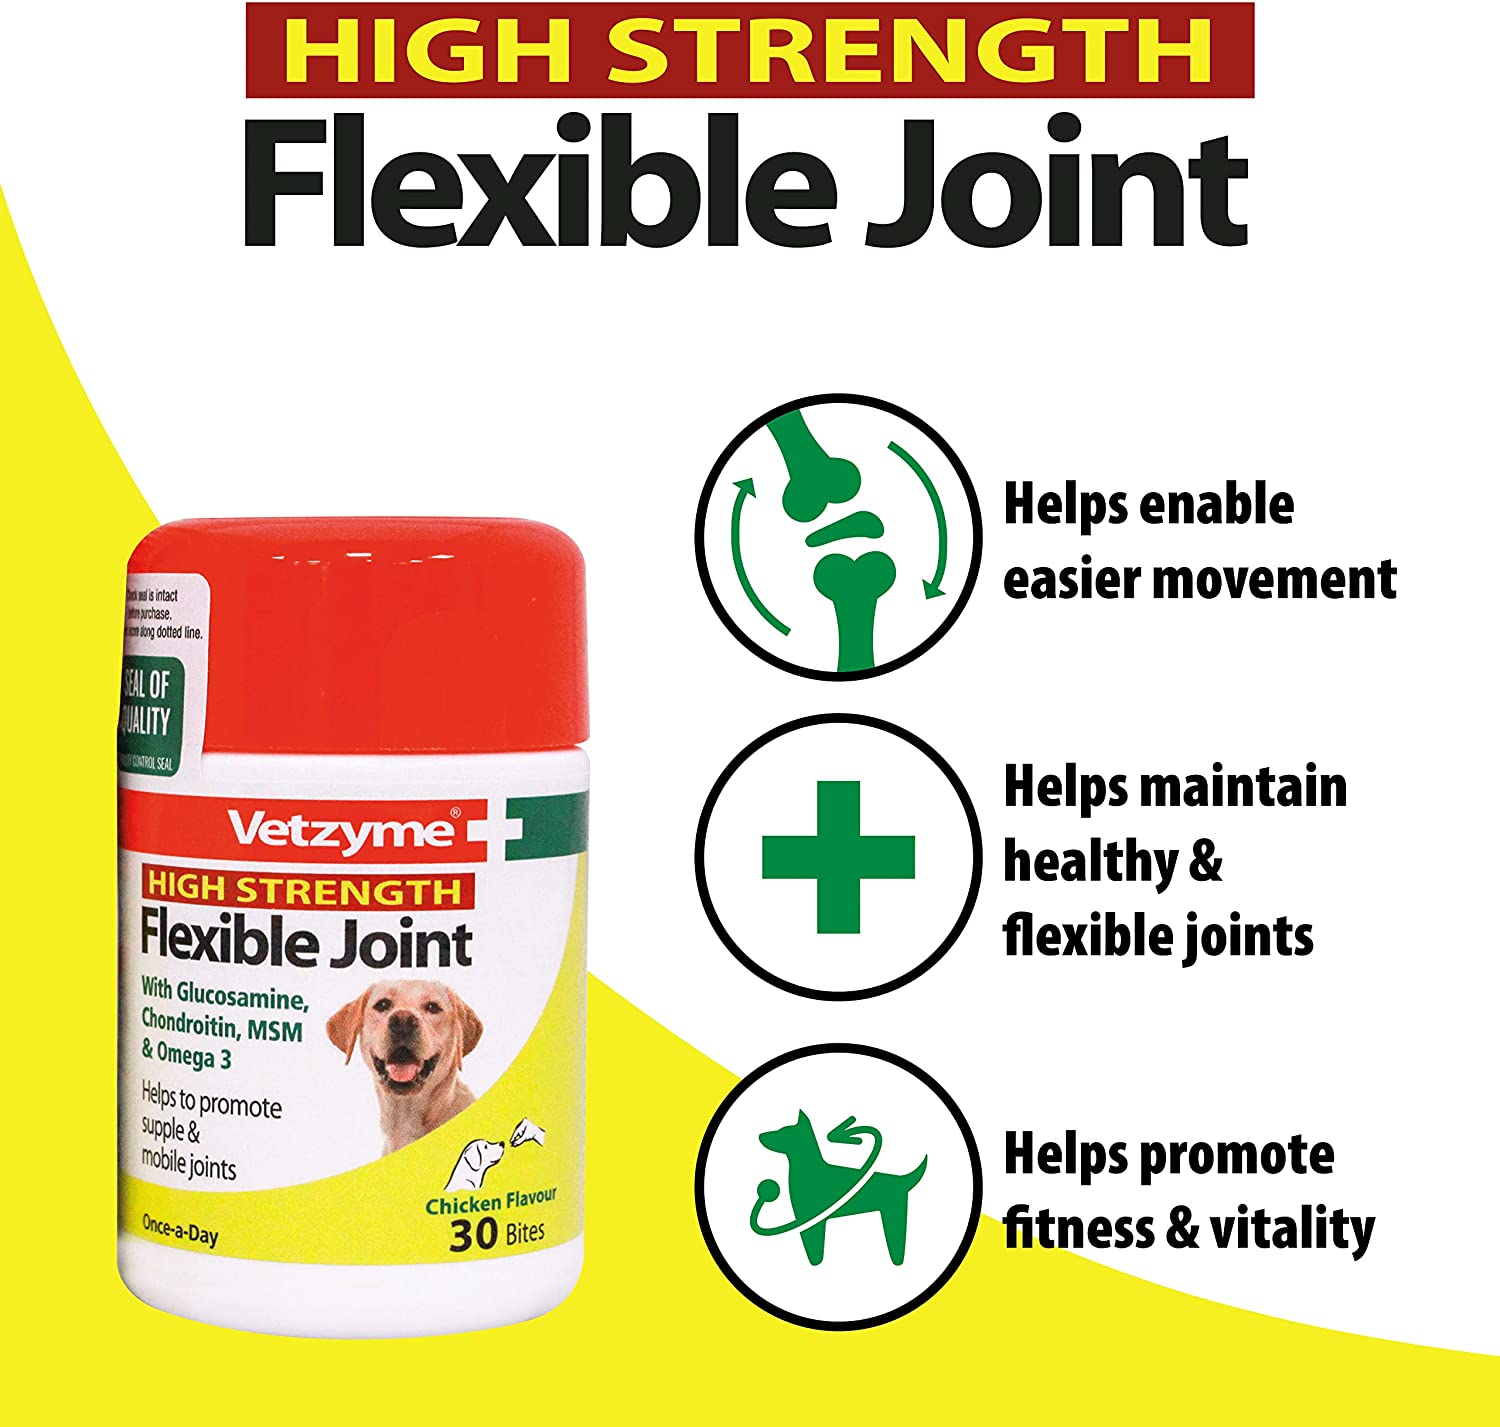 Vetzyme Flexible Joint 30 Tablets